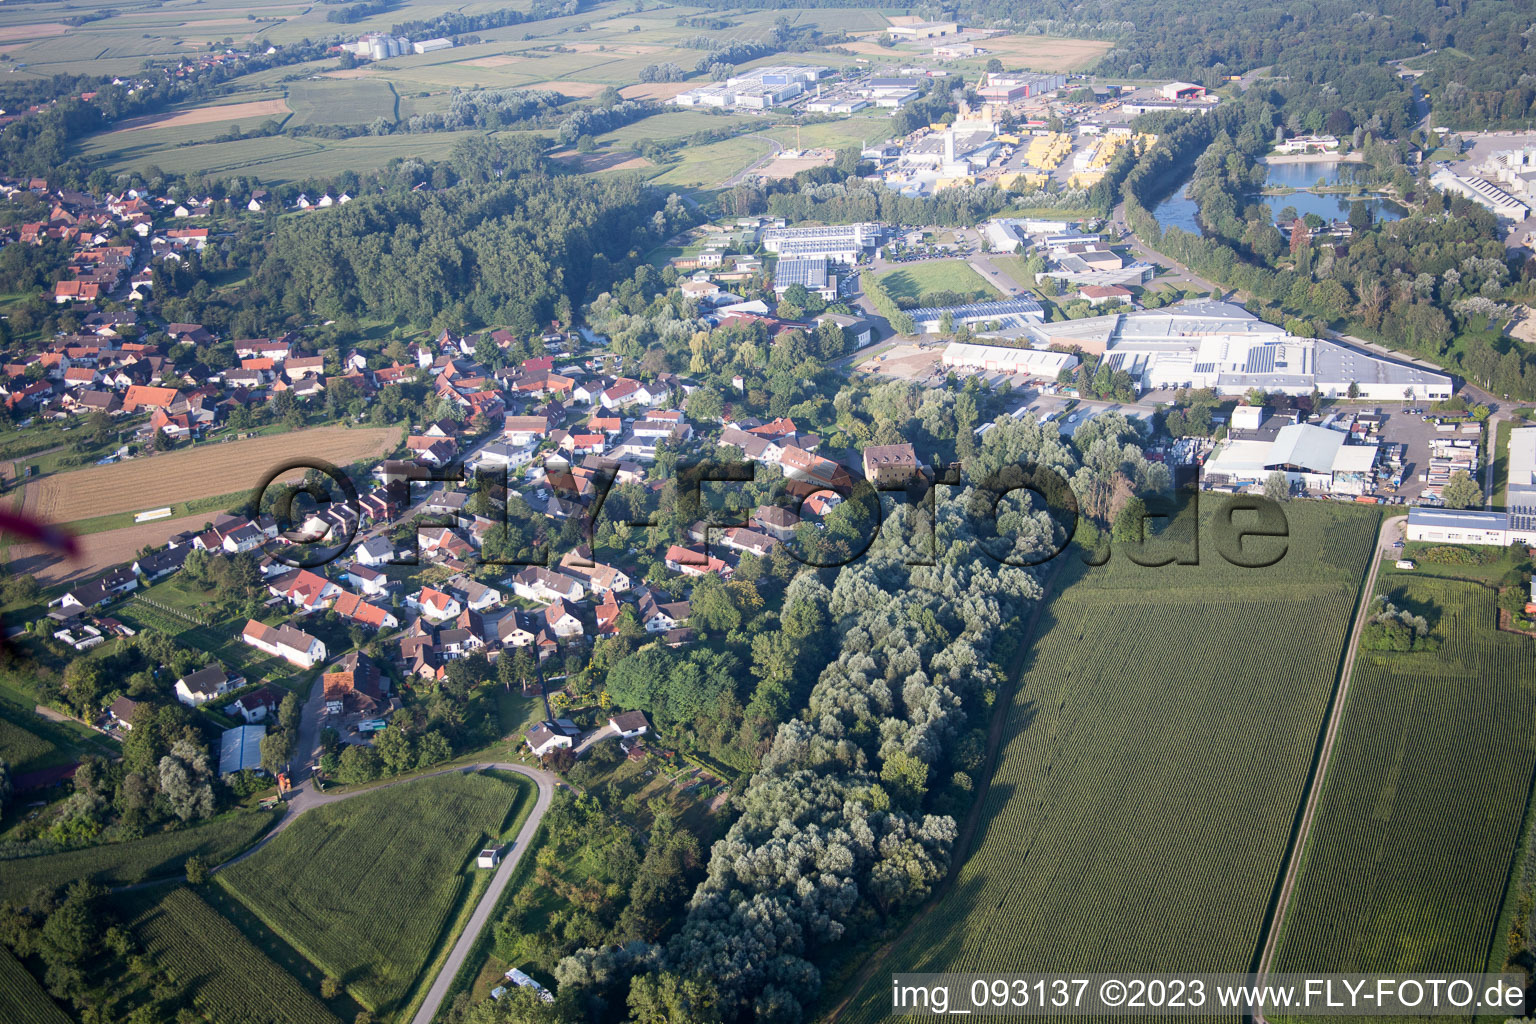 Quartier Freistett in Rheinau dans le département Bade-Wurtemberg, Allemagne vue d'en haut